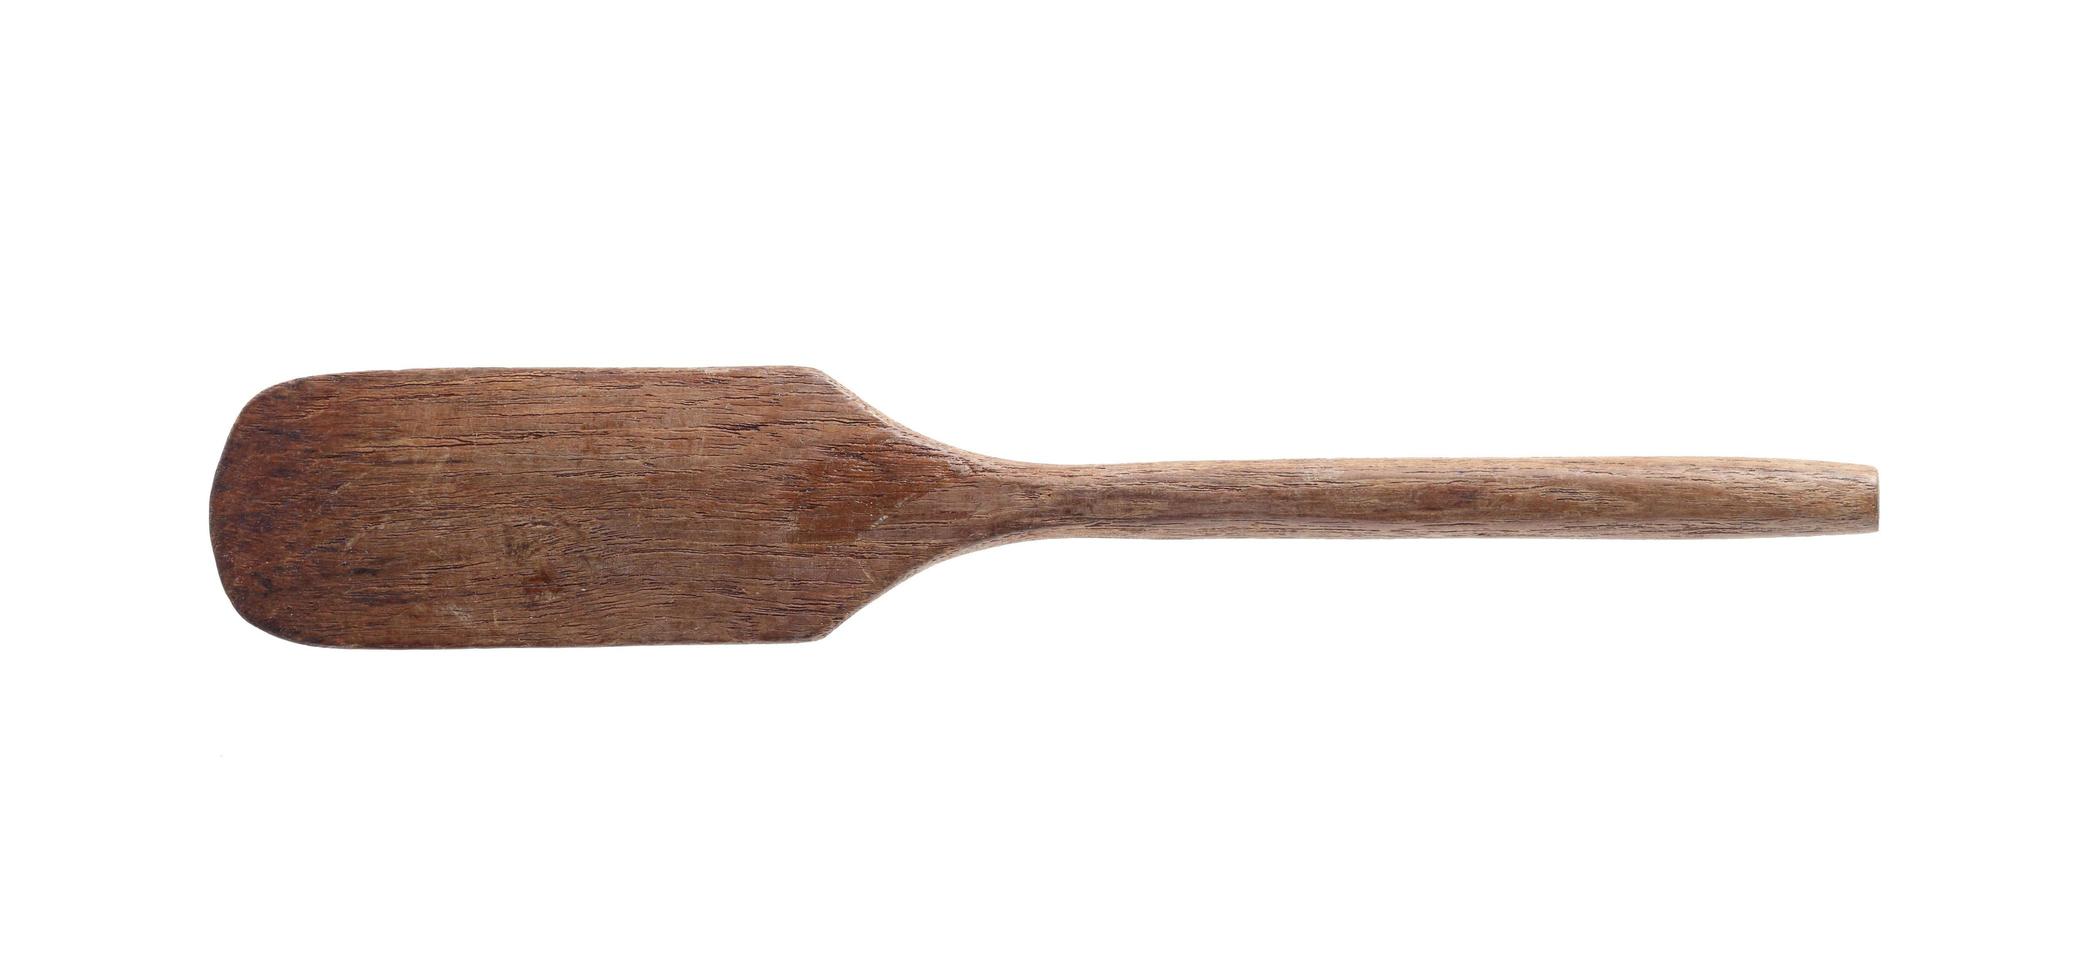 Vintage wooden spatula on white background photo